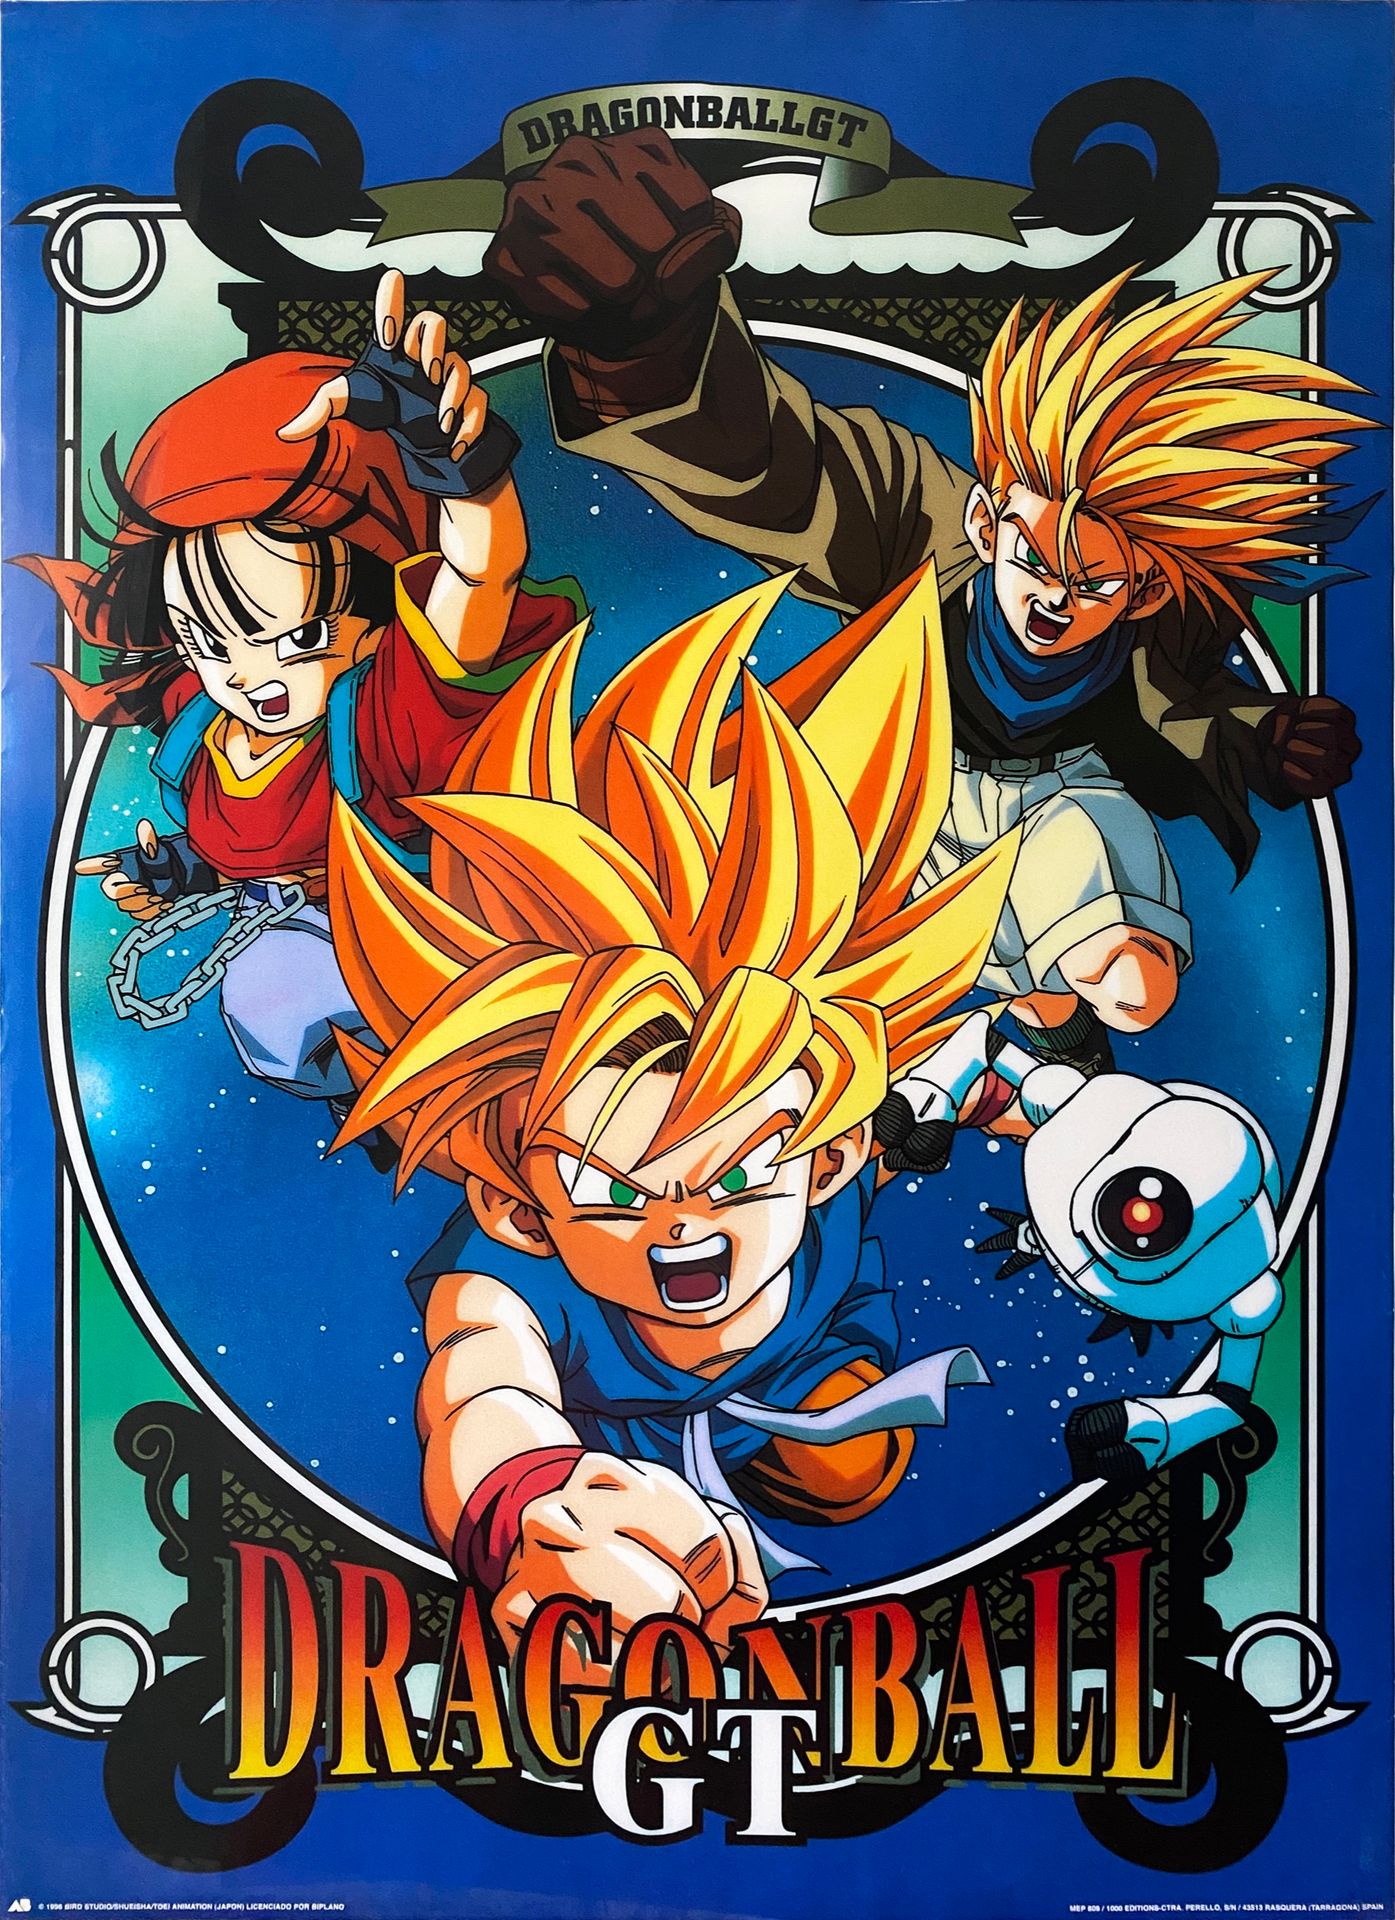 AKIRA TORIYAMA  Dragon Ball GT  Poster - Offset poster…